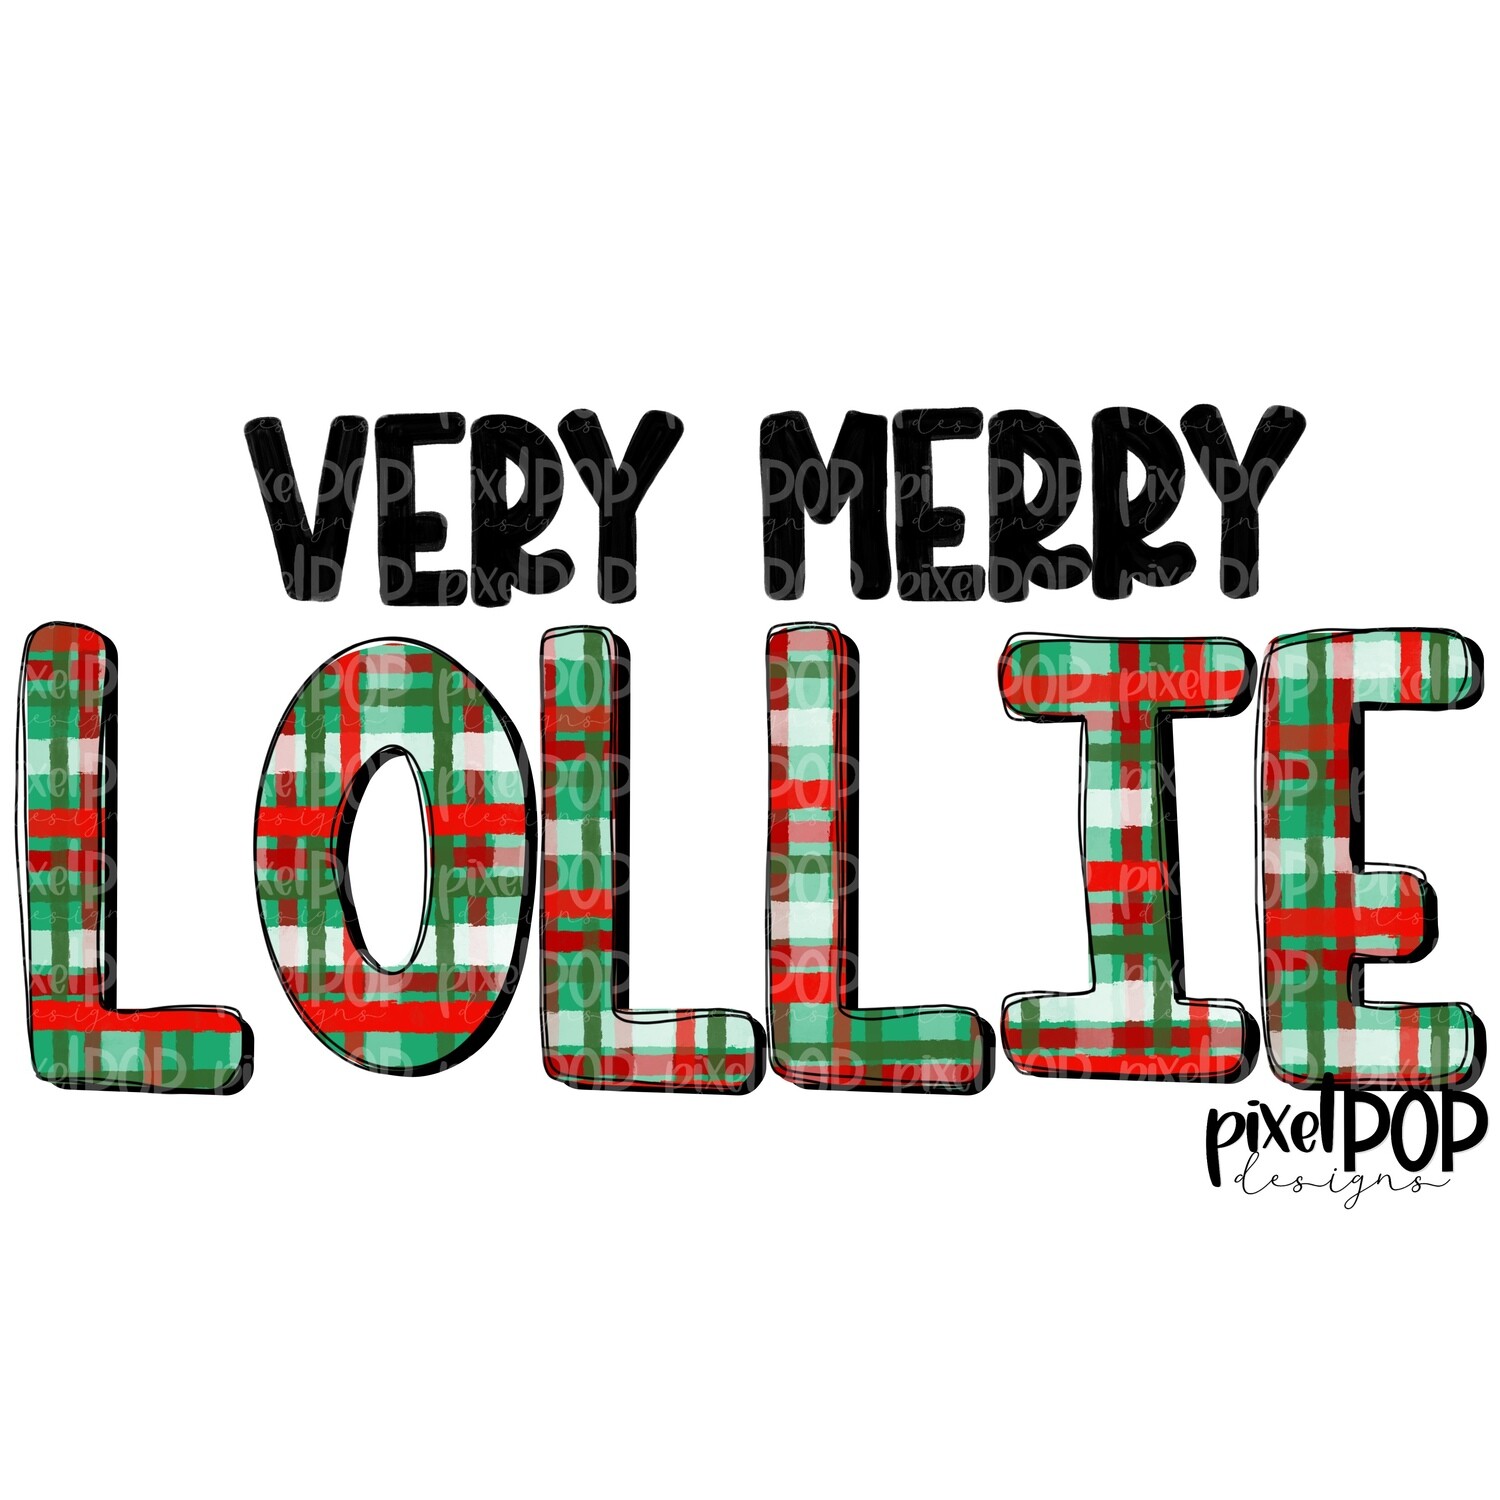 Very Merry Lollie Christmas PLAID PNG | Christmas Design | Sublimation Art | Digital Download | Printable Artwork | Art